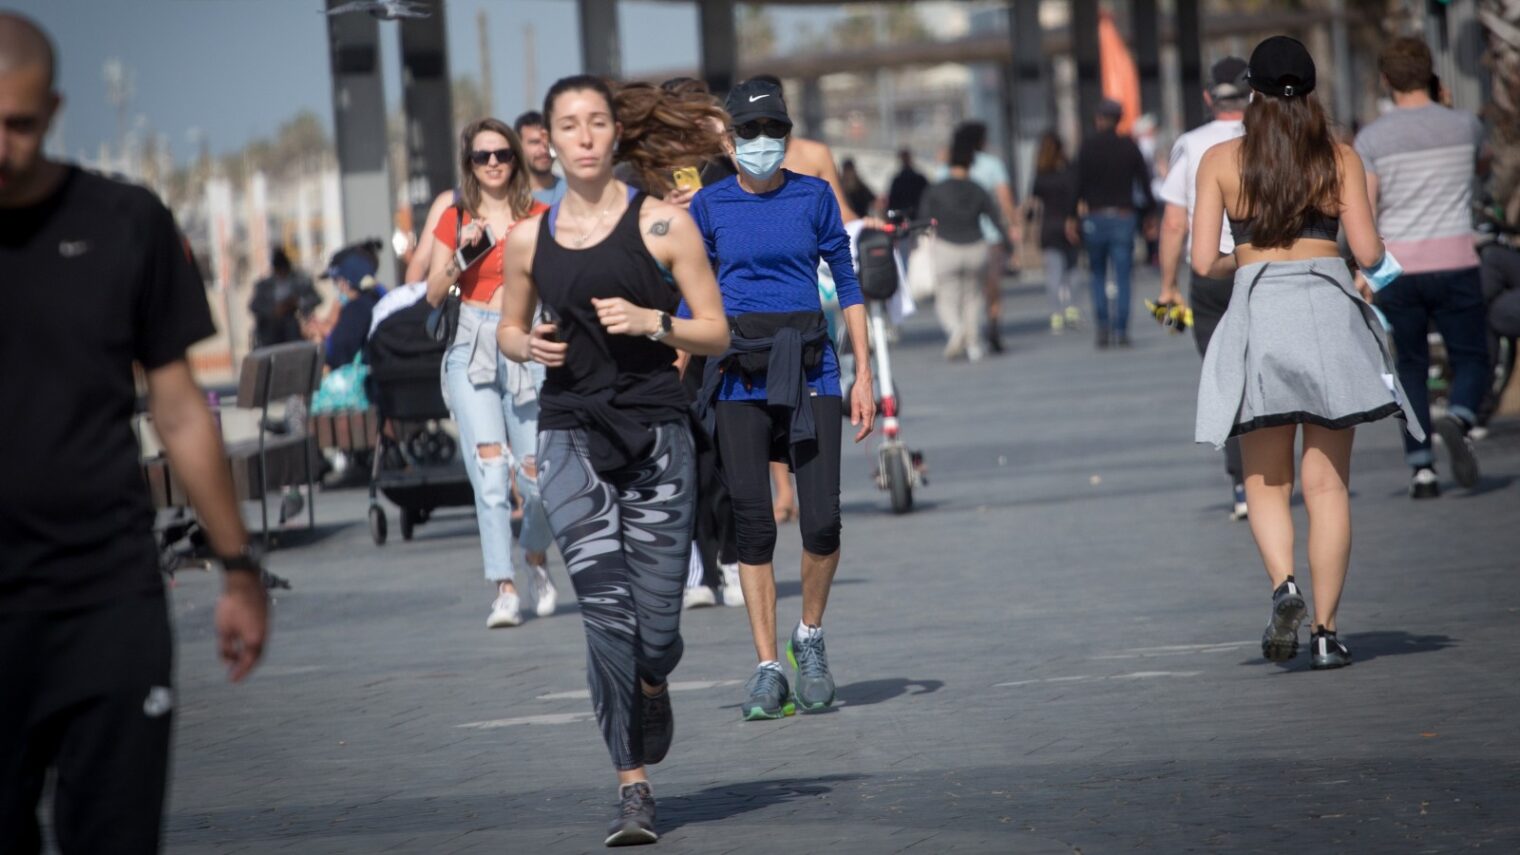 Jogging on the Tel Aviv beach boardwalk, February 3, 2021. Photo by Miriam Alster/FLASH90